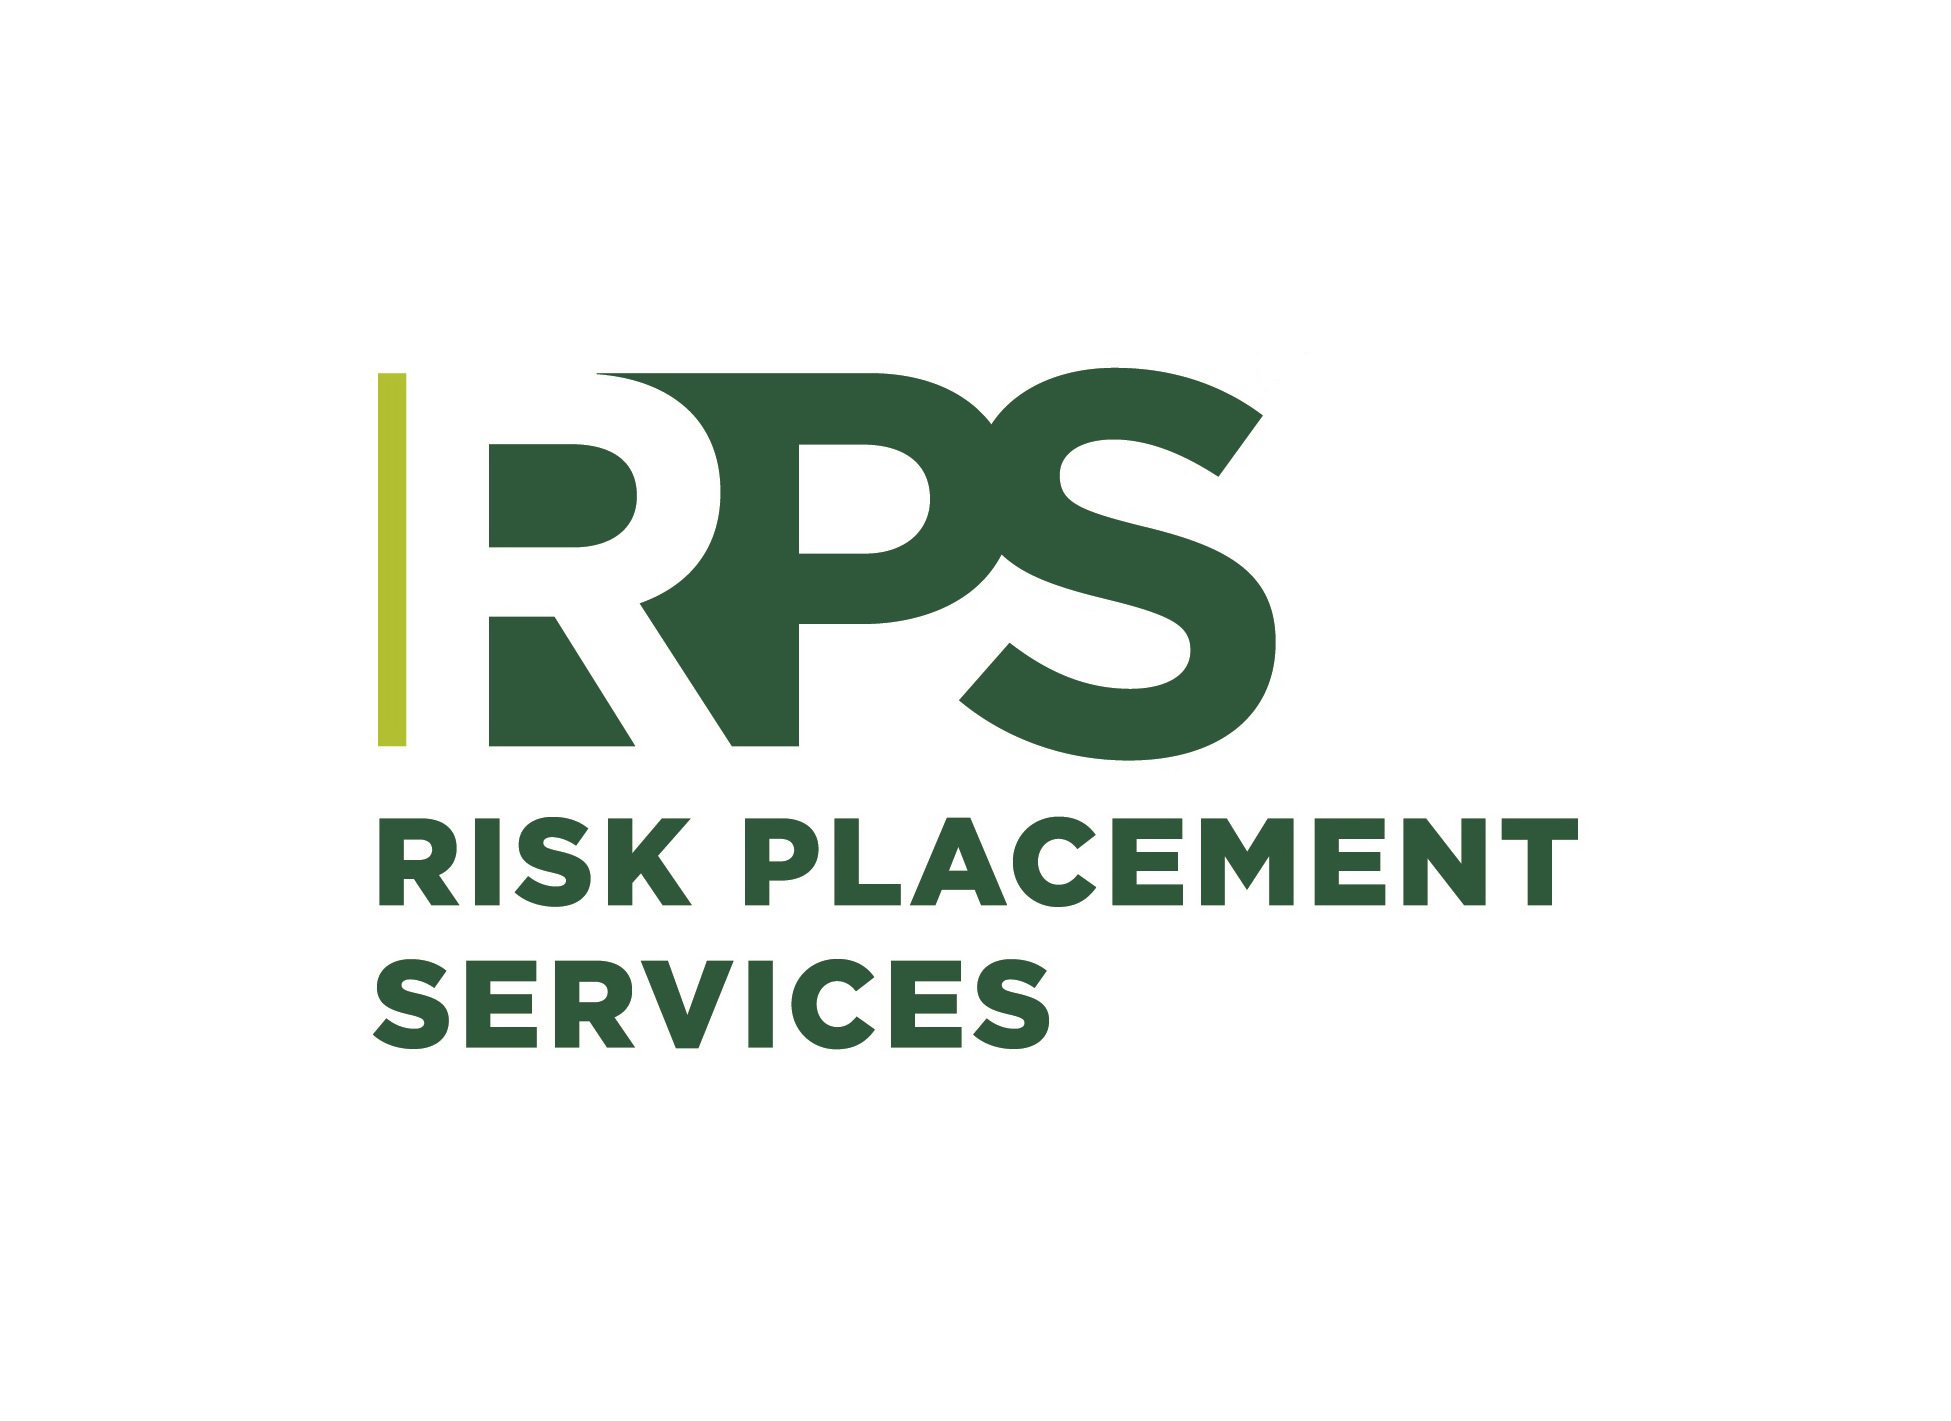  RPS RISK PLACEMENT SERVICES